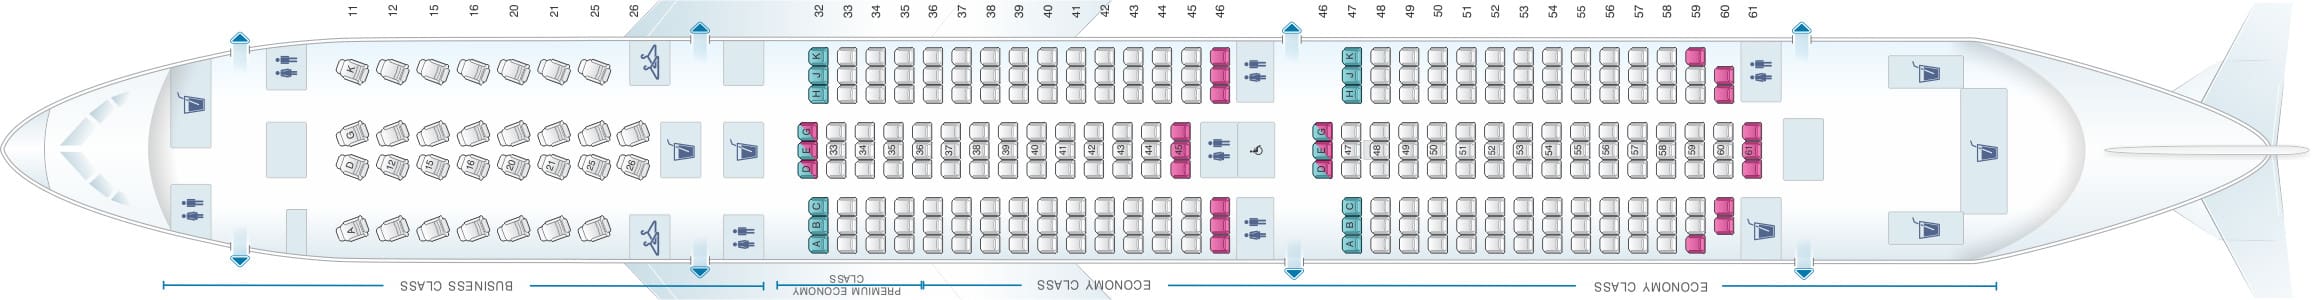 Hawaiian Airlines 787 (787-9) Seat Map